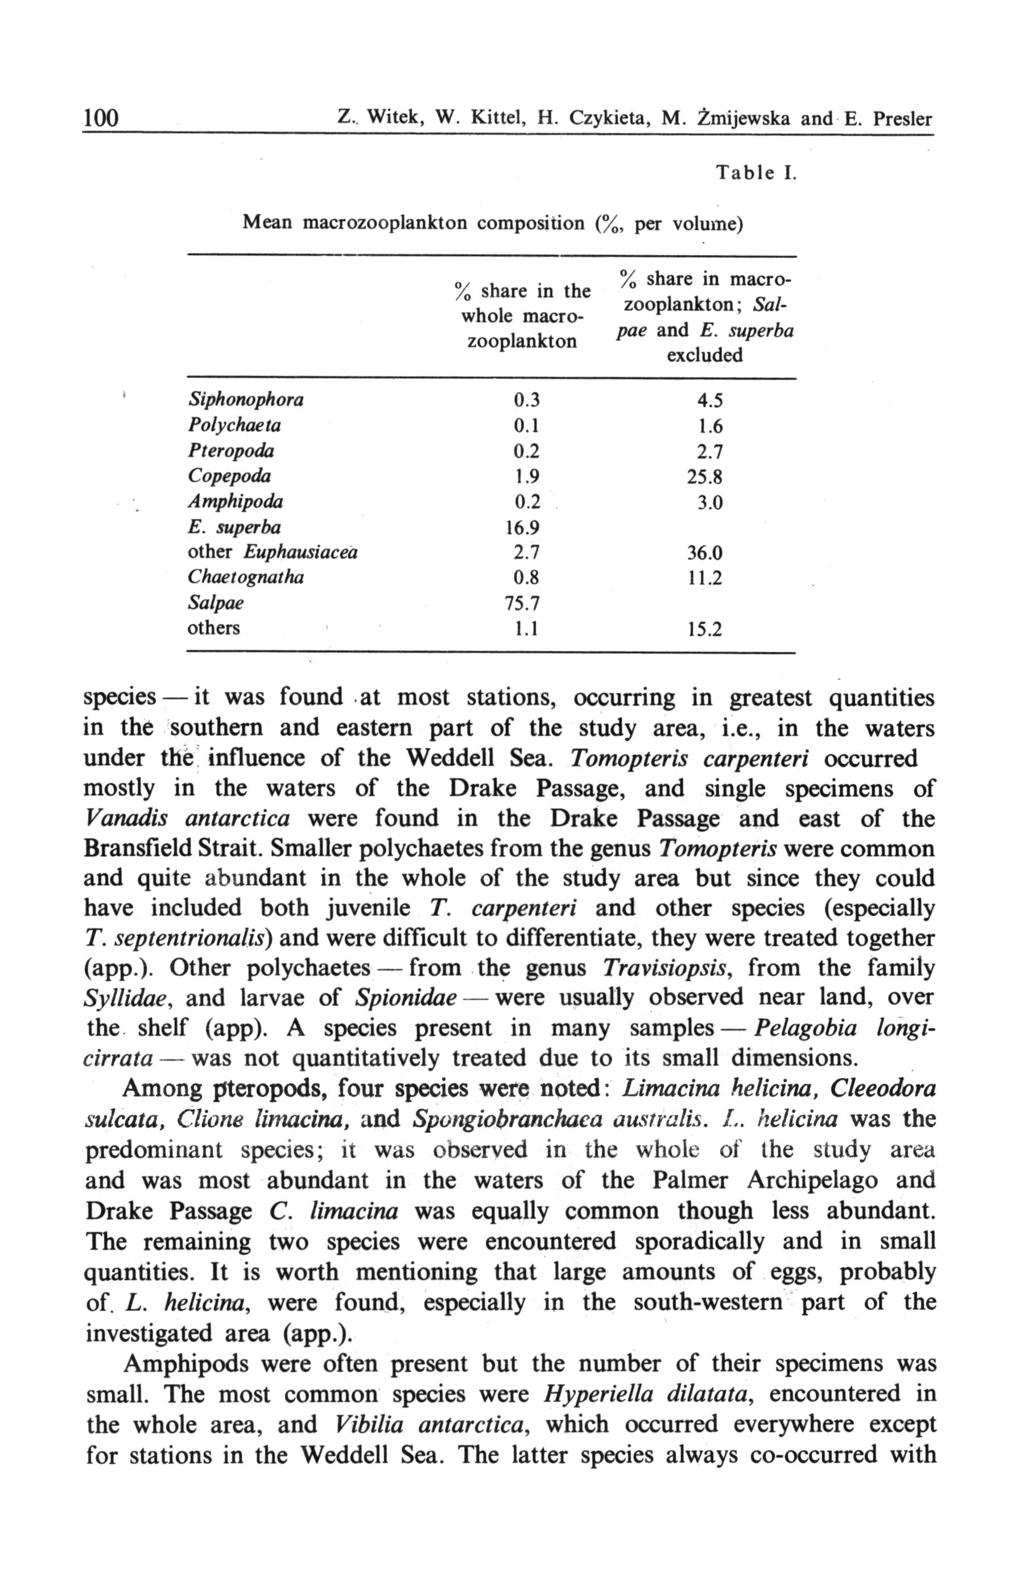 100 Z. Witek. W. Kittel. H. Czykieta, M. Żmijewska, and E. Presler Mean macrozooplankton composition (%, per volume) Table I.